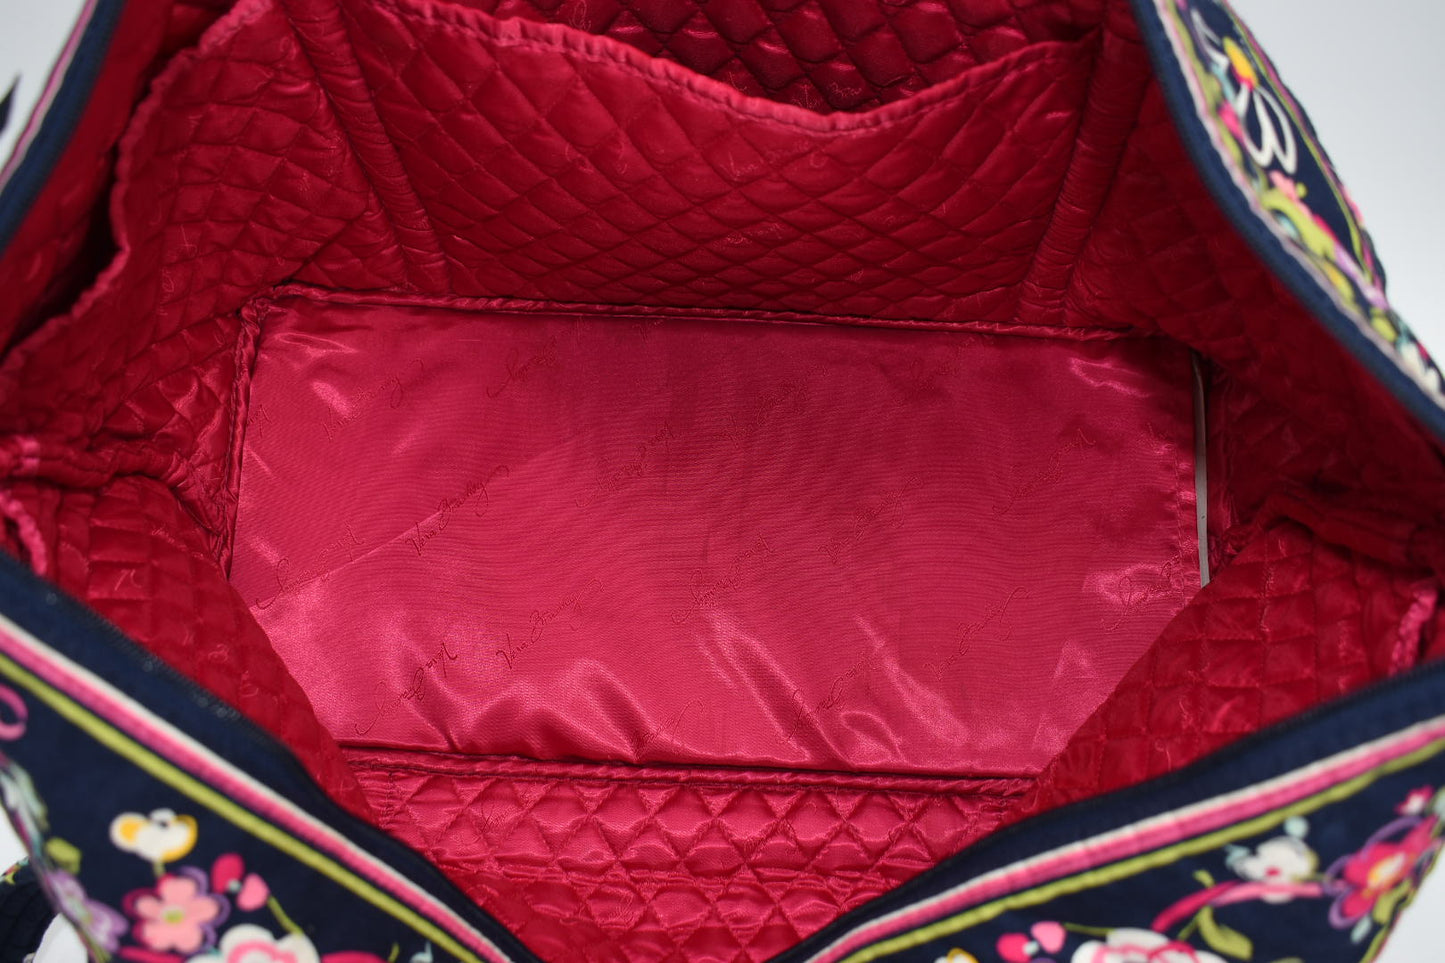 Vera Bradley Large Miller Travel Tote Bag in Petal Paisley Pattern